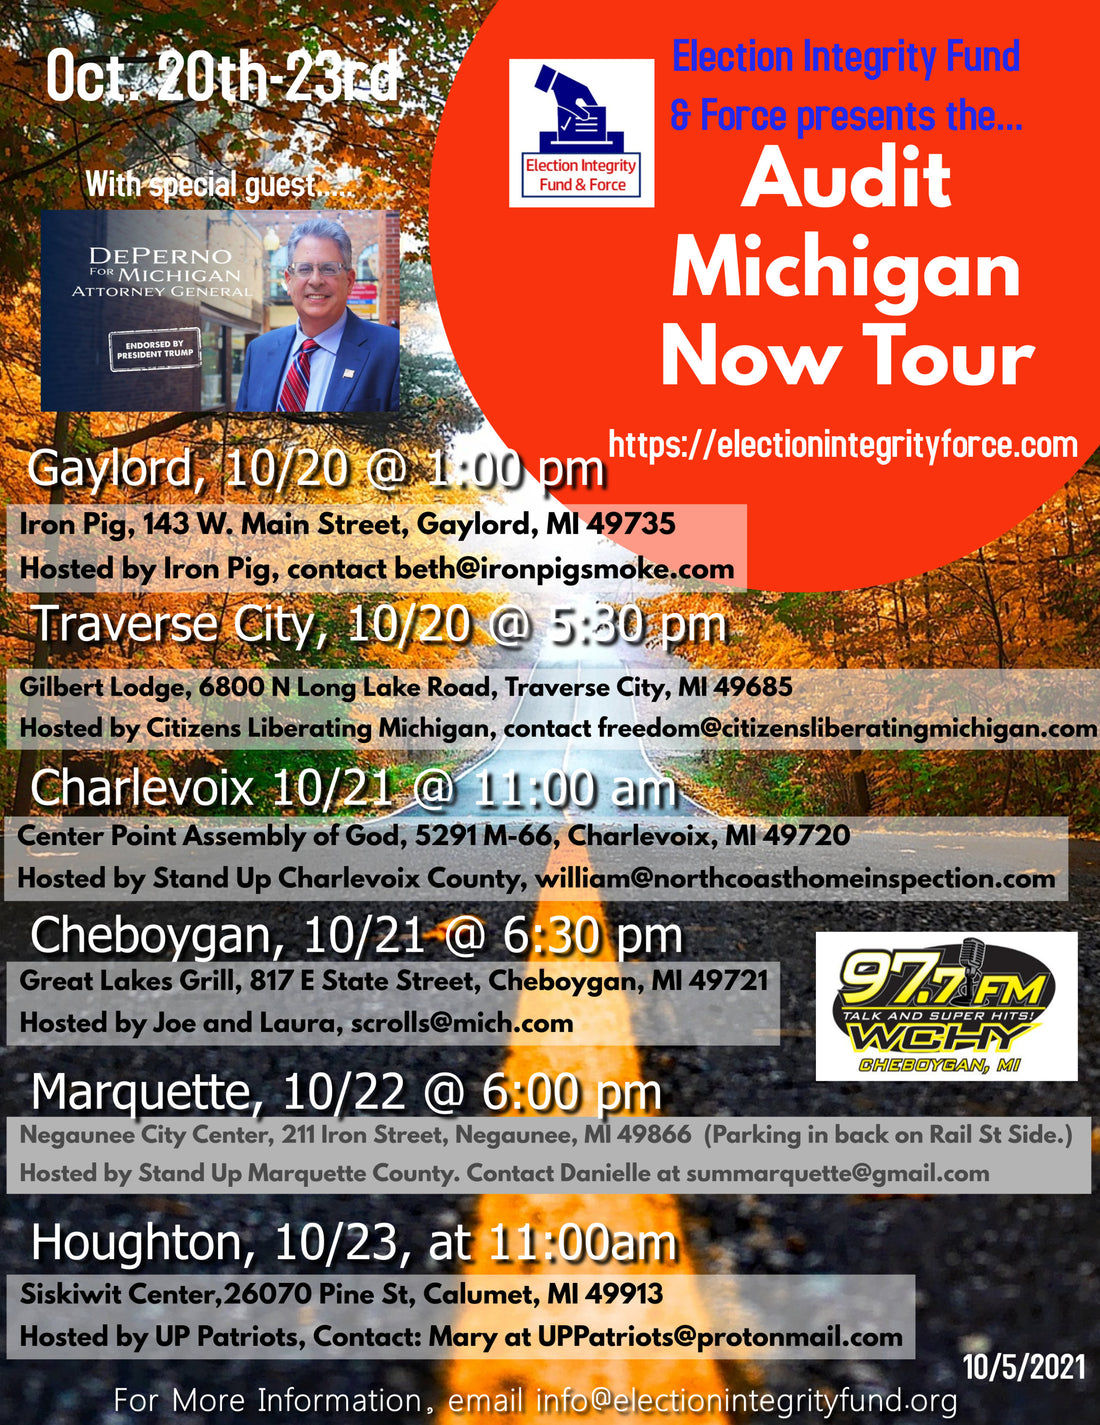 Great Audit Michigan Now Tour